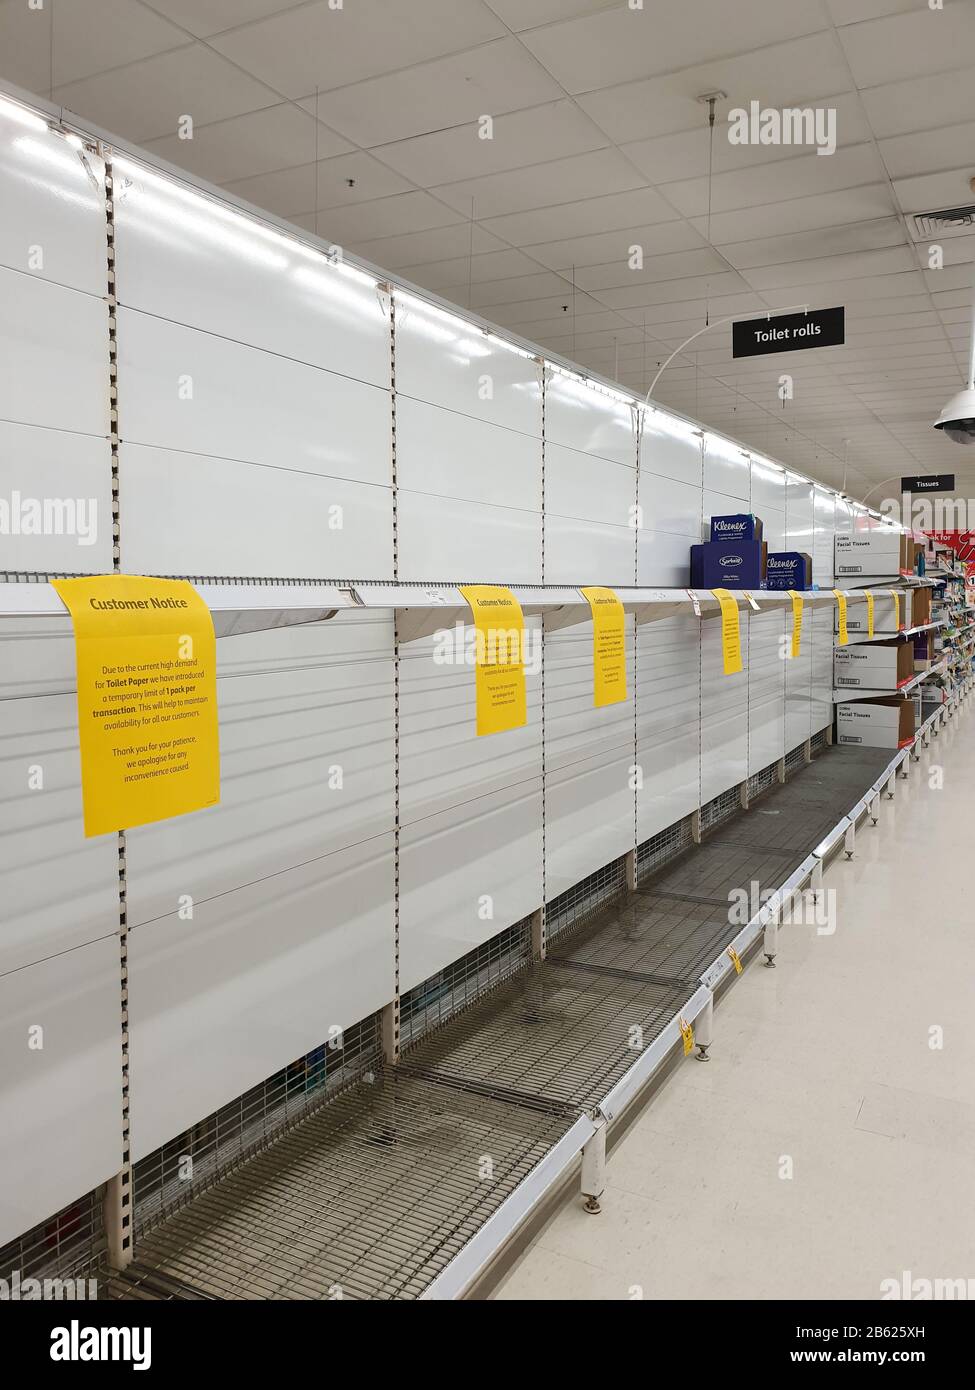 Woolworths Supermarkt leer toilettenpapierregale inmitten von Coronavirus Ängsten und Panikkäufen Stockfoto